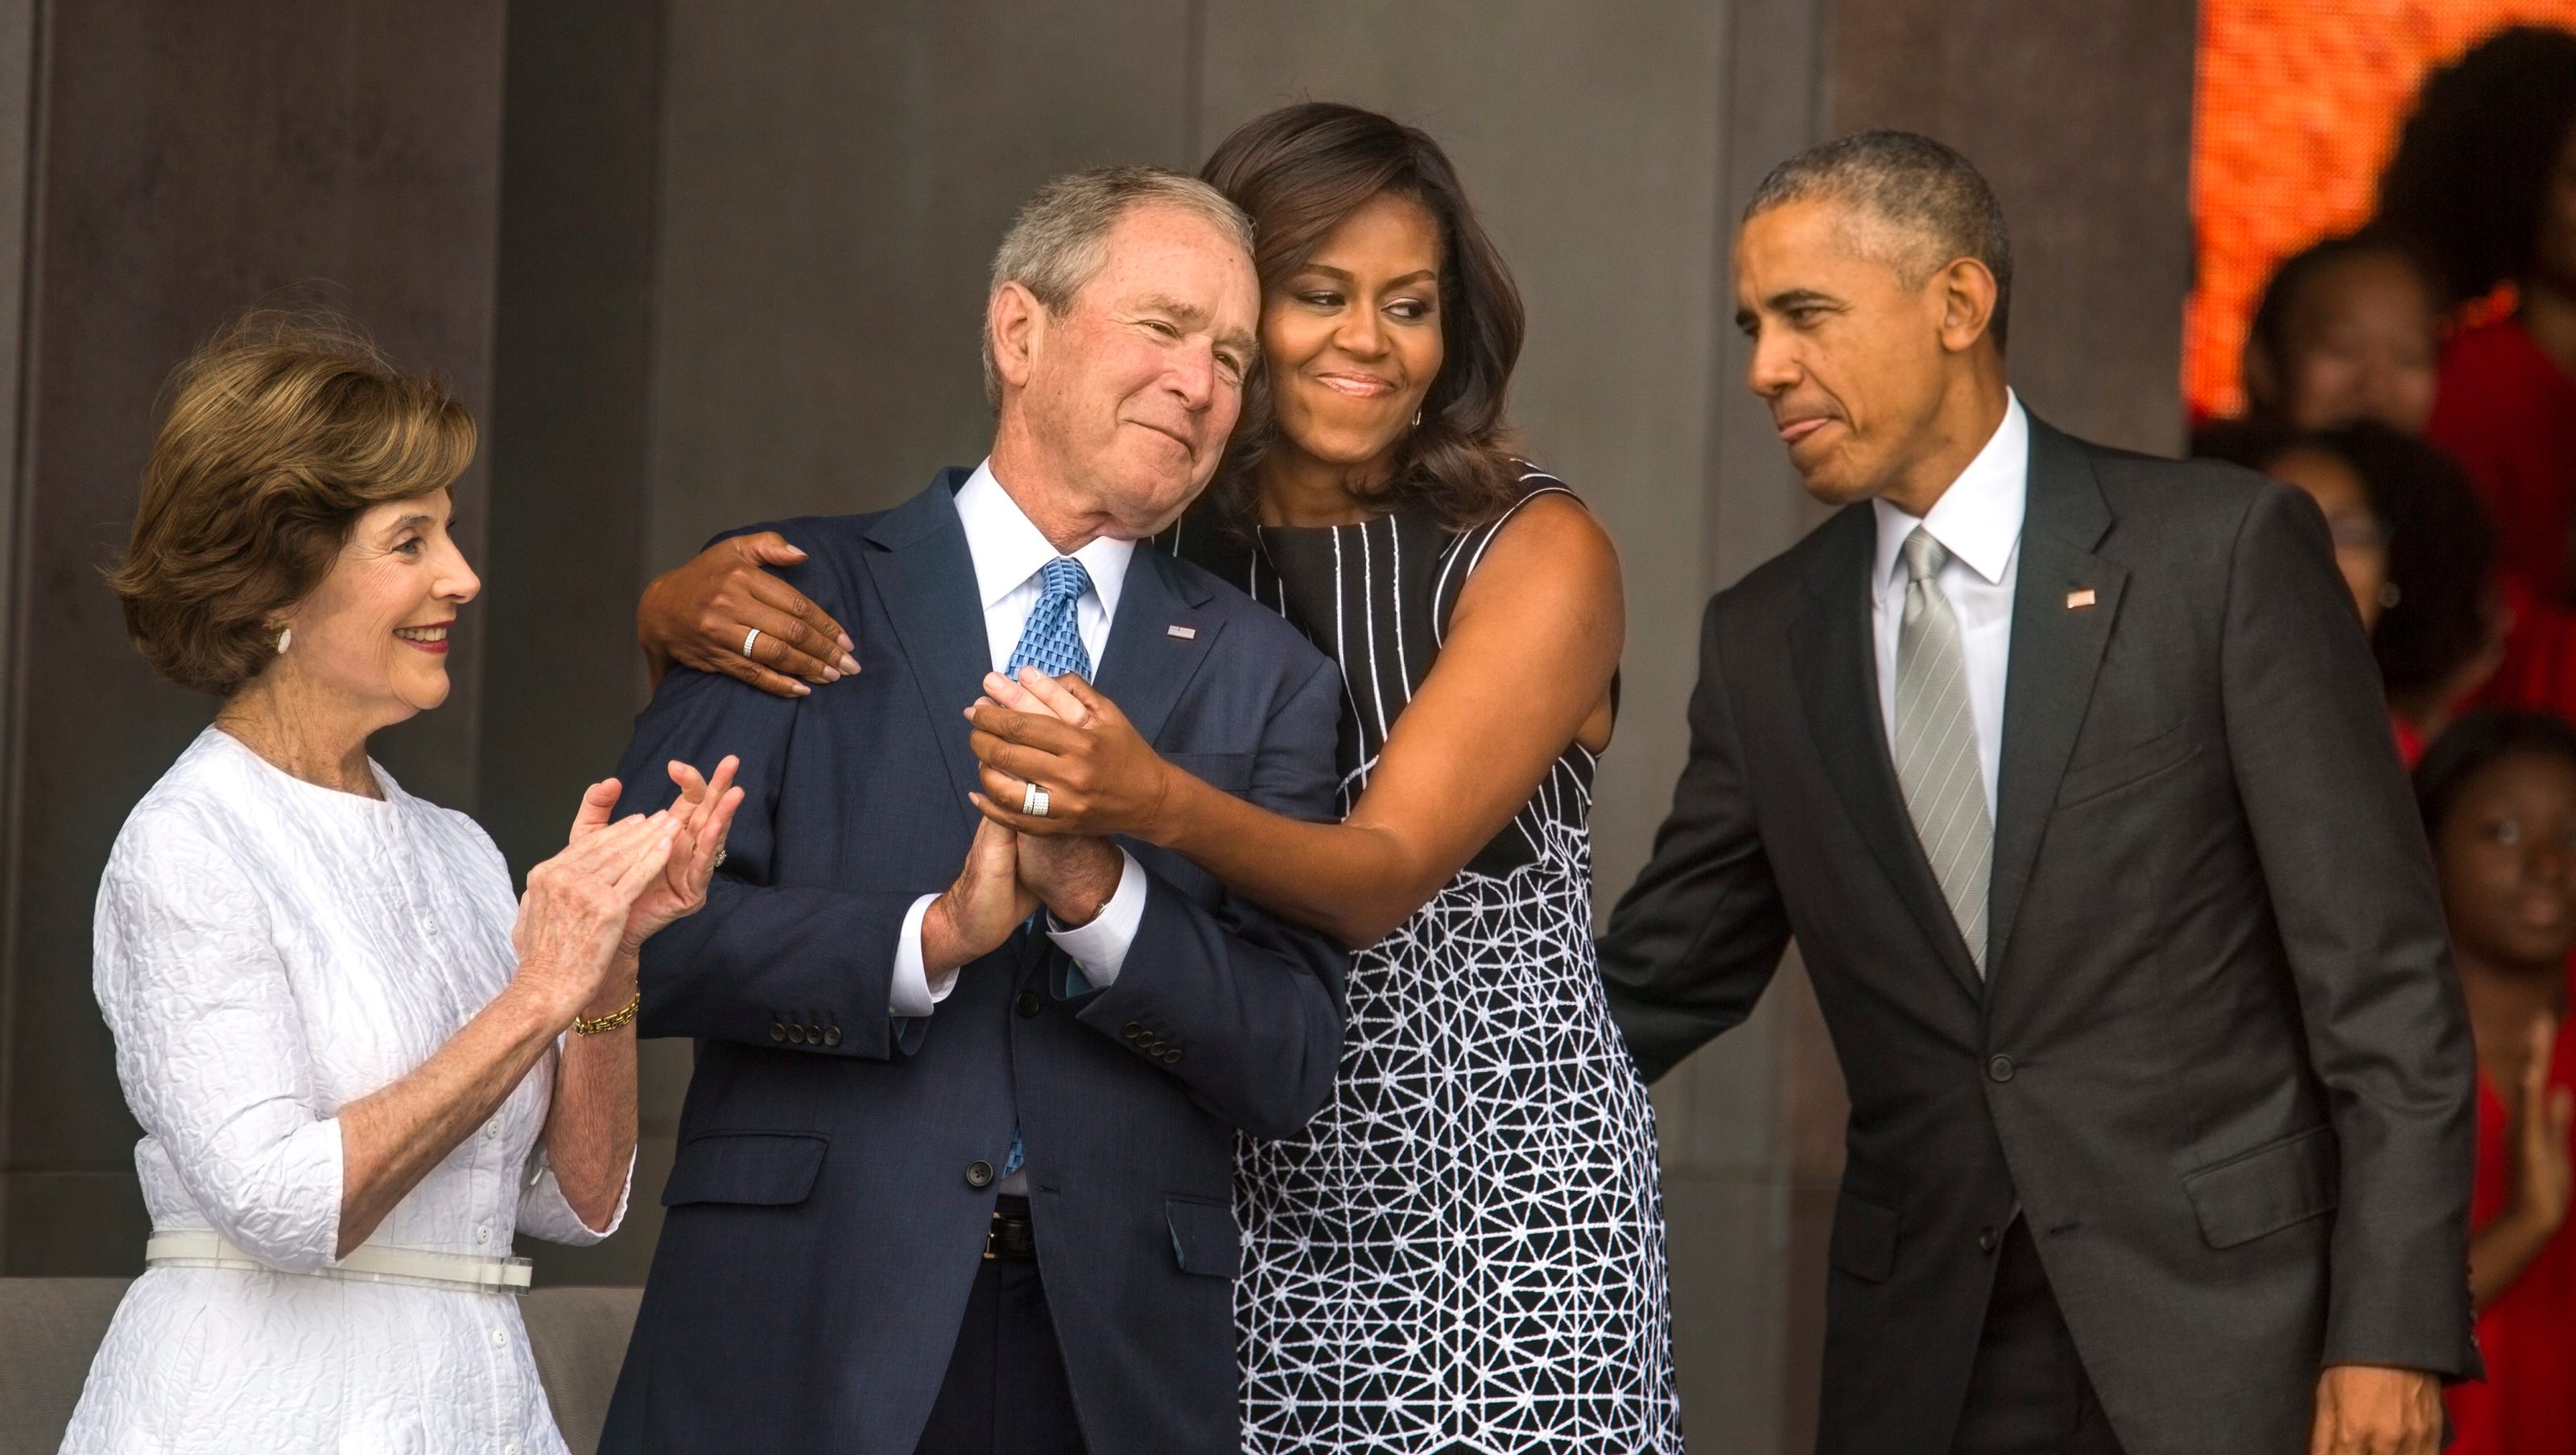 George W. Bush, Michelle Obama friendship: Bush shocked over uproar